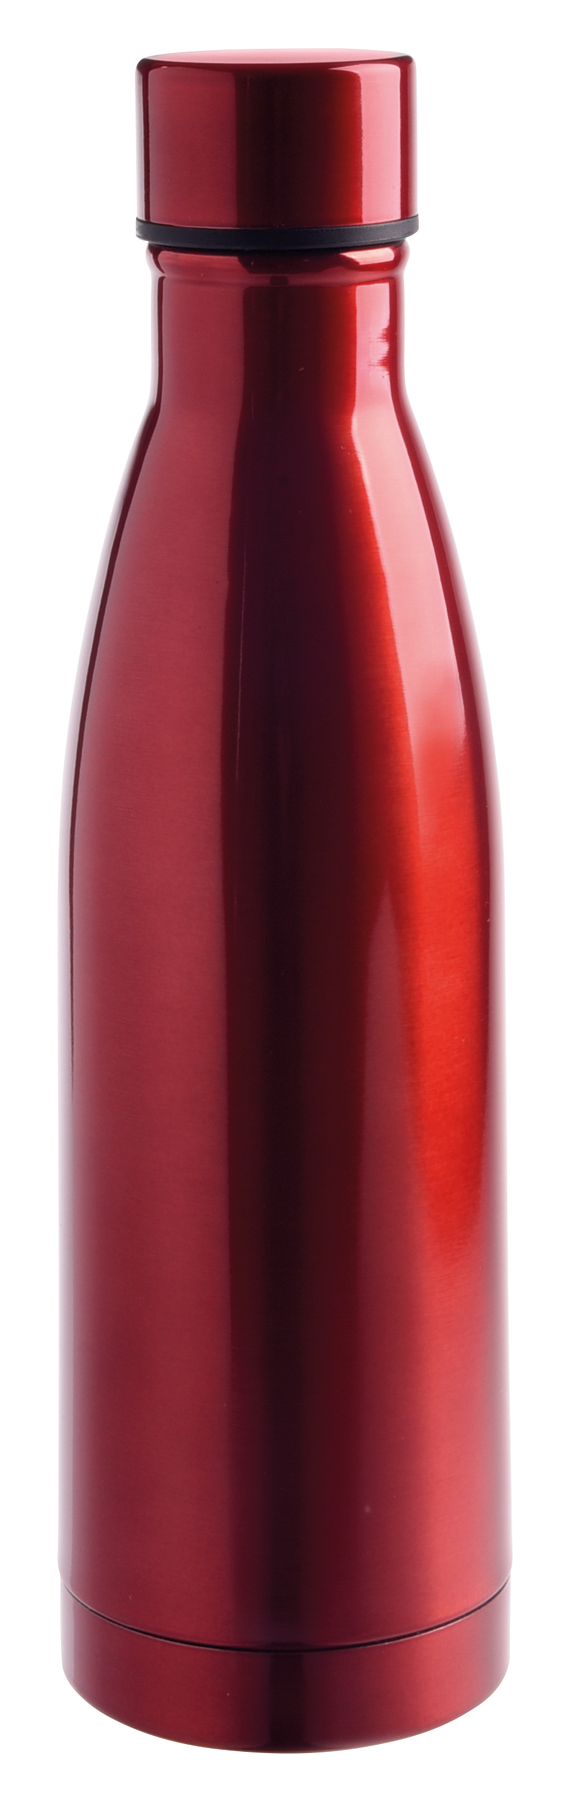 Vacuum drinking bottle LEGENDY - red